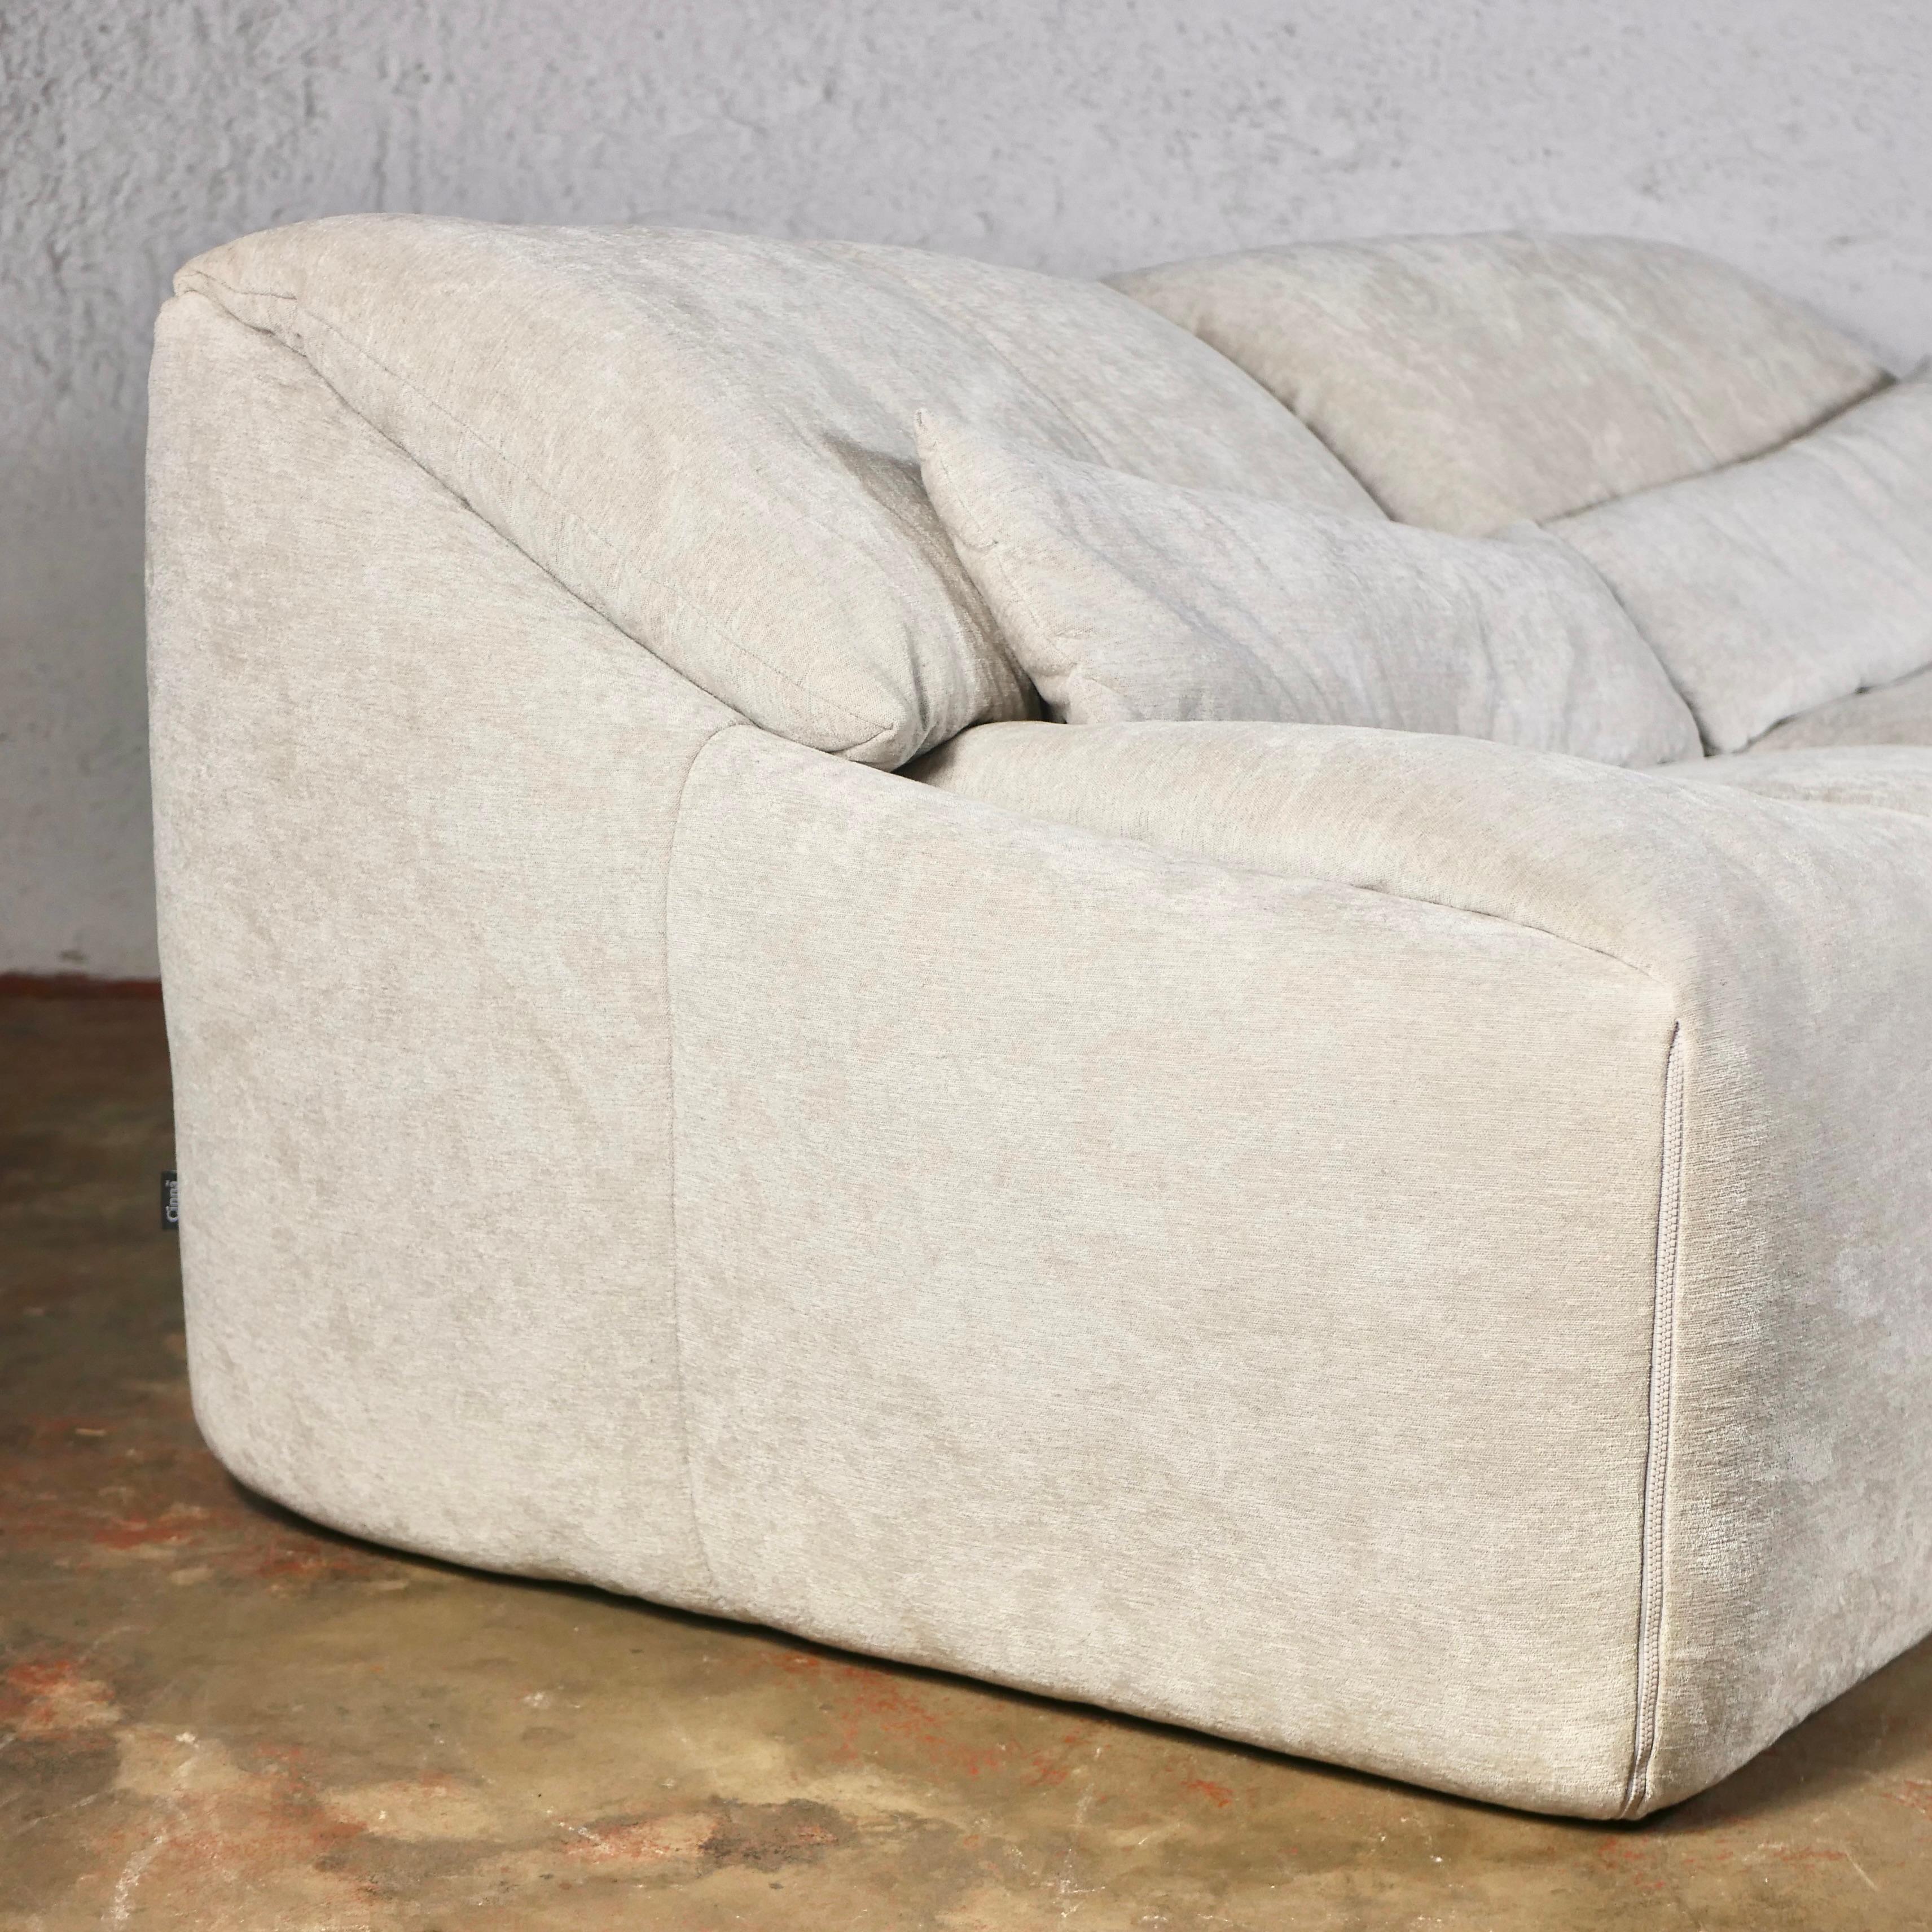 Plumy sofa by Annie Hiéronimus for Cinna, 2017 edition 2